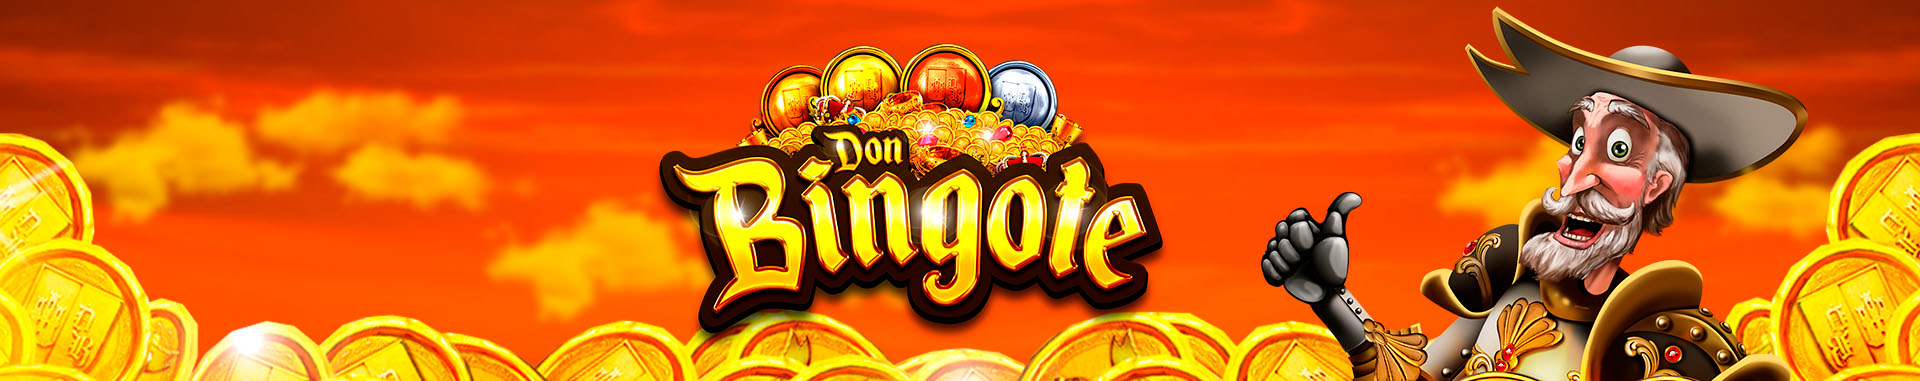 Video Bingo Don Bingote